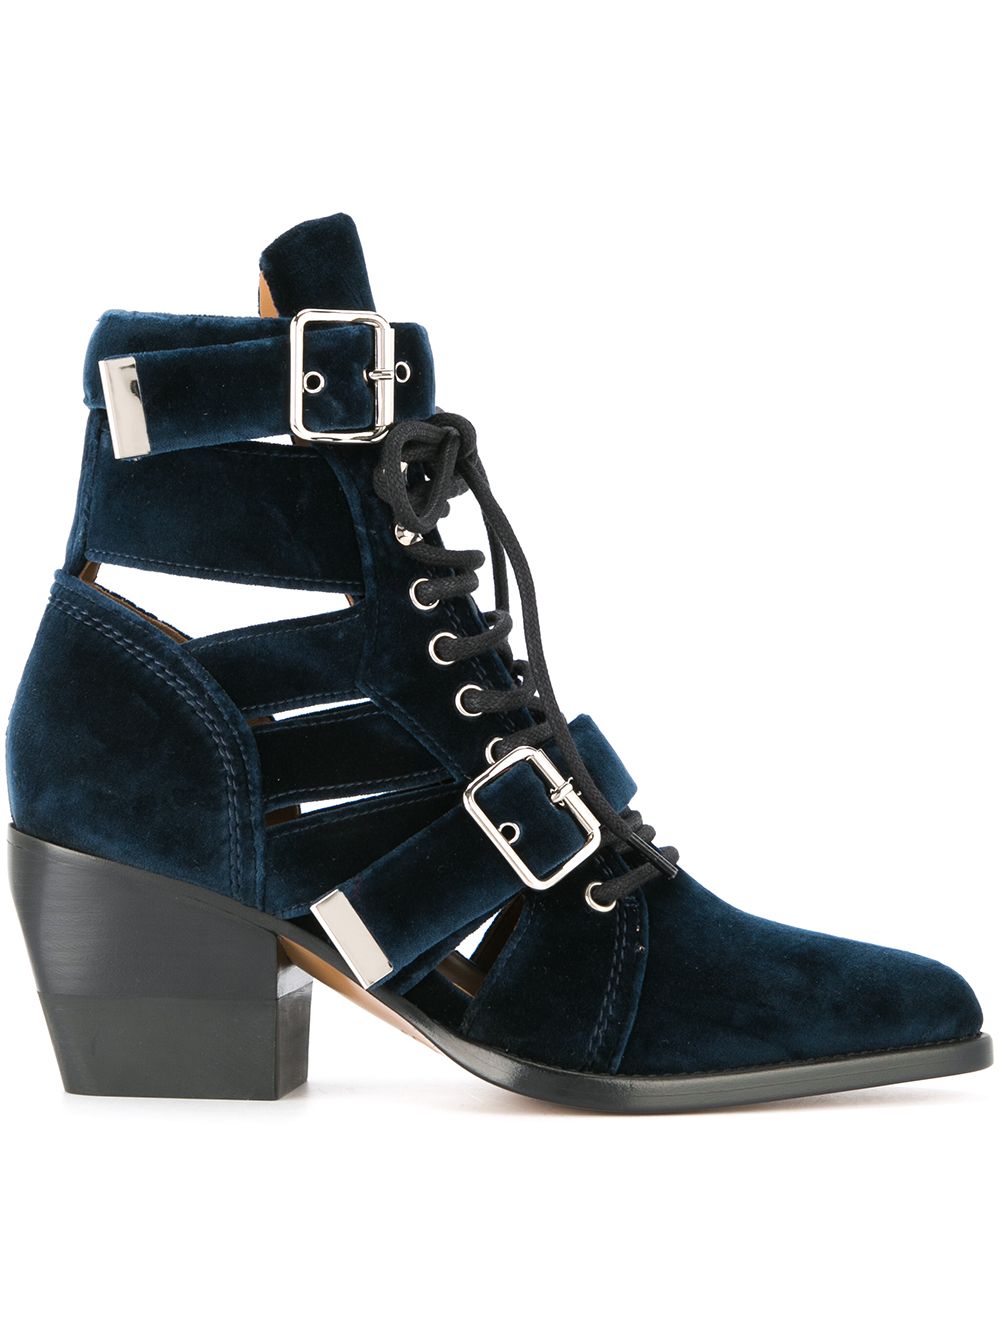 Shop blue Chloé Rylee medium boots with 